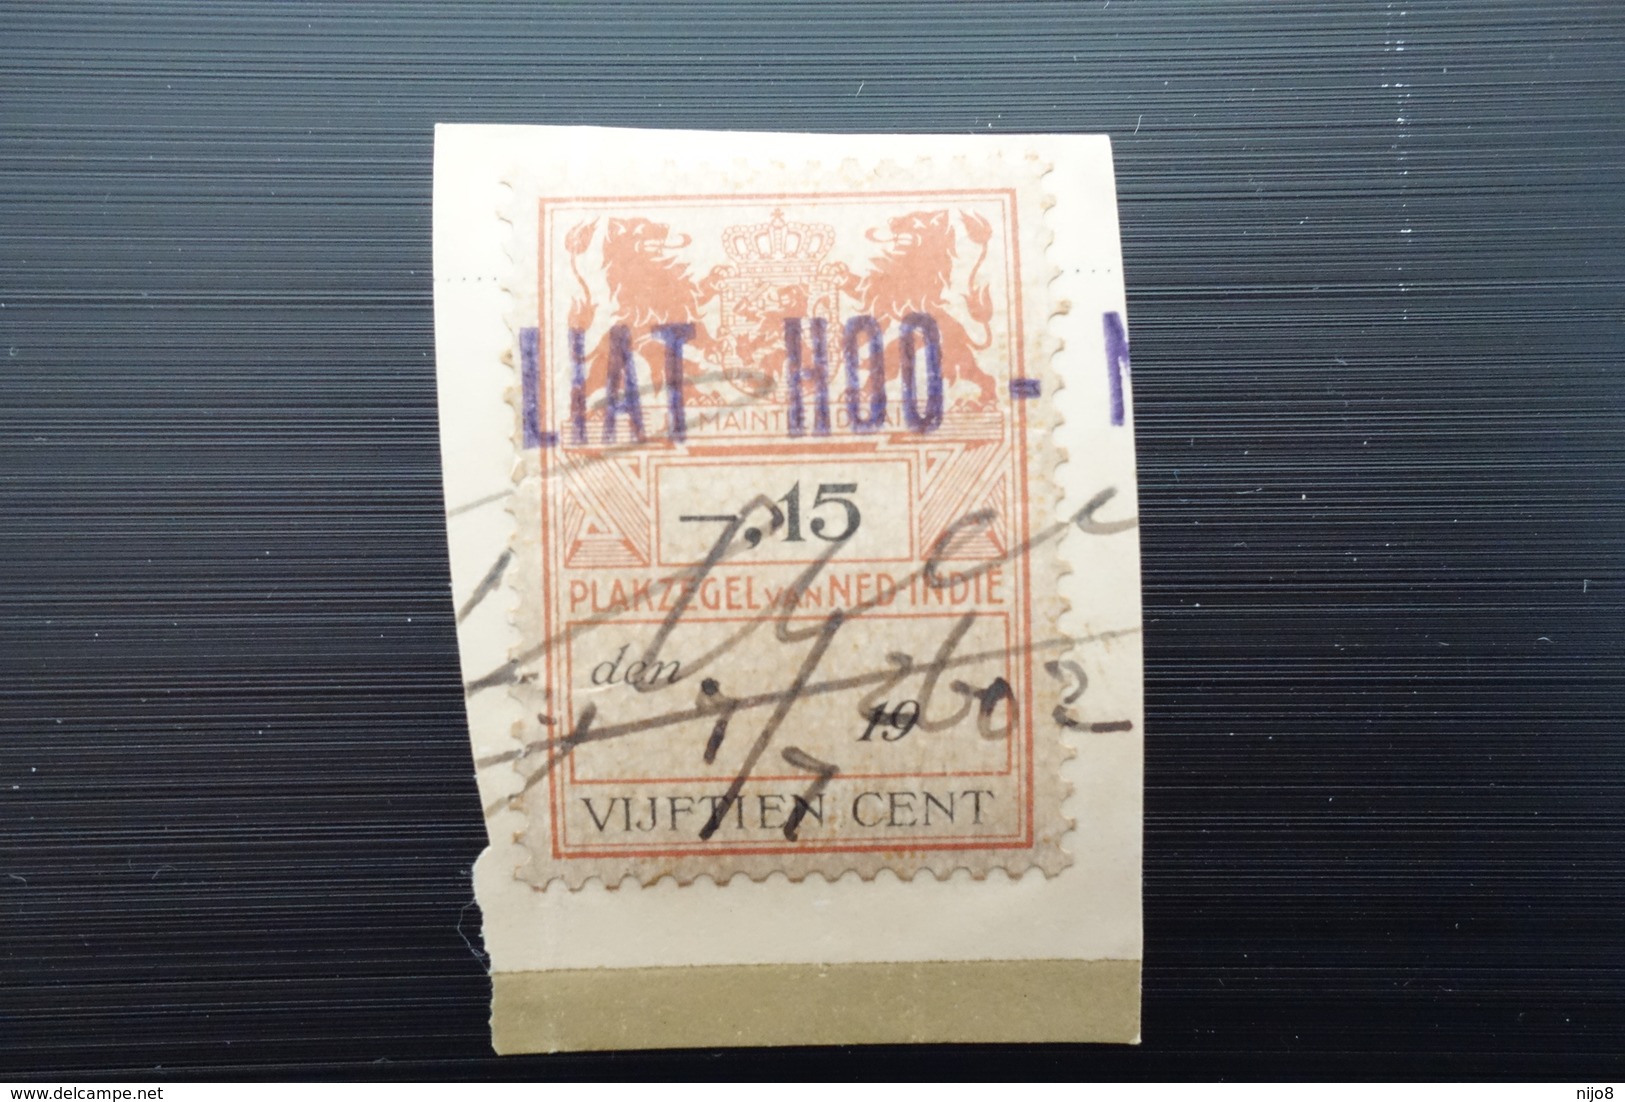 NETHERLAND INDIES : PLAKZEGEL 15 Cent, NON OVPT On Fragment (4.7.2602) - Netherlands Indies